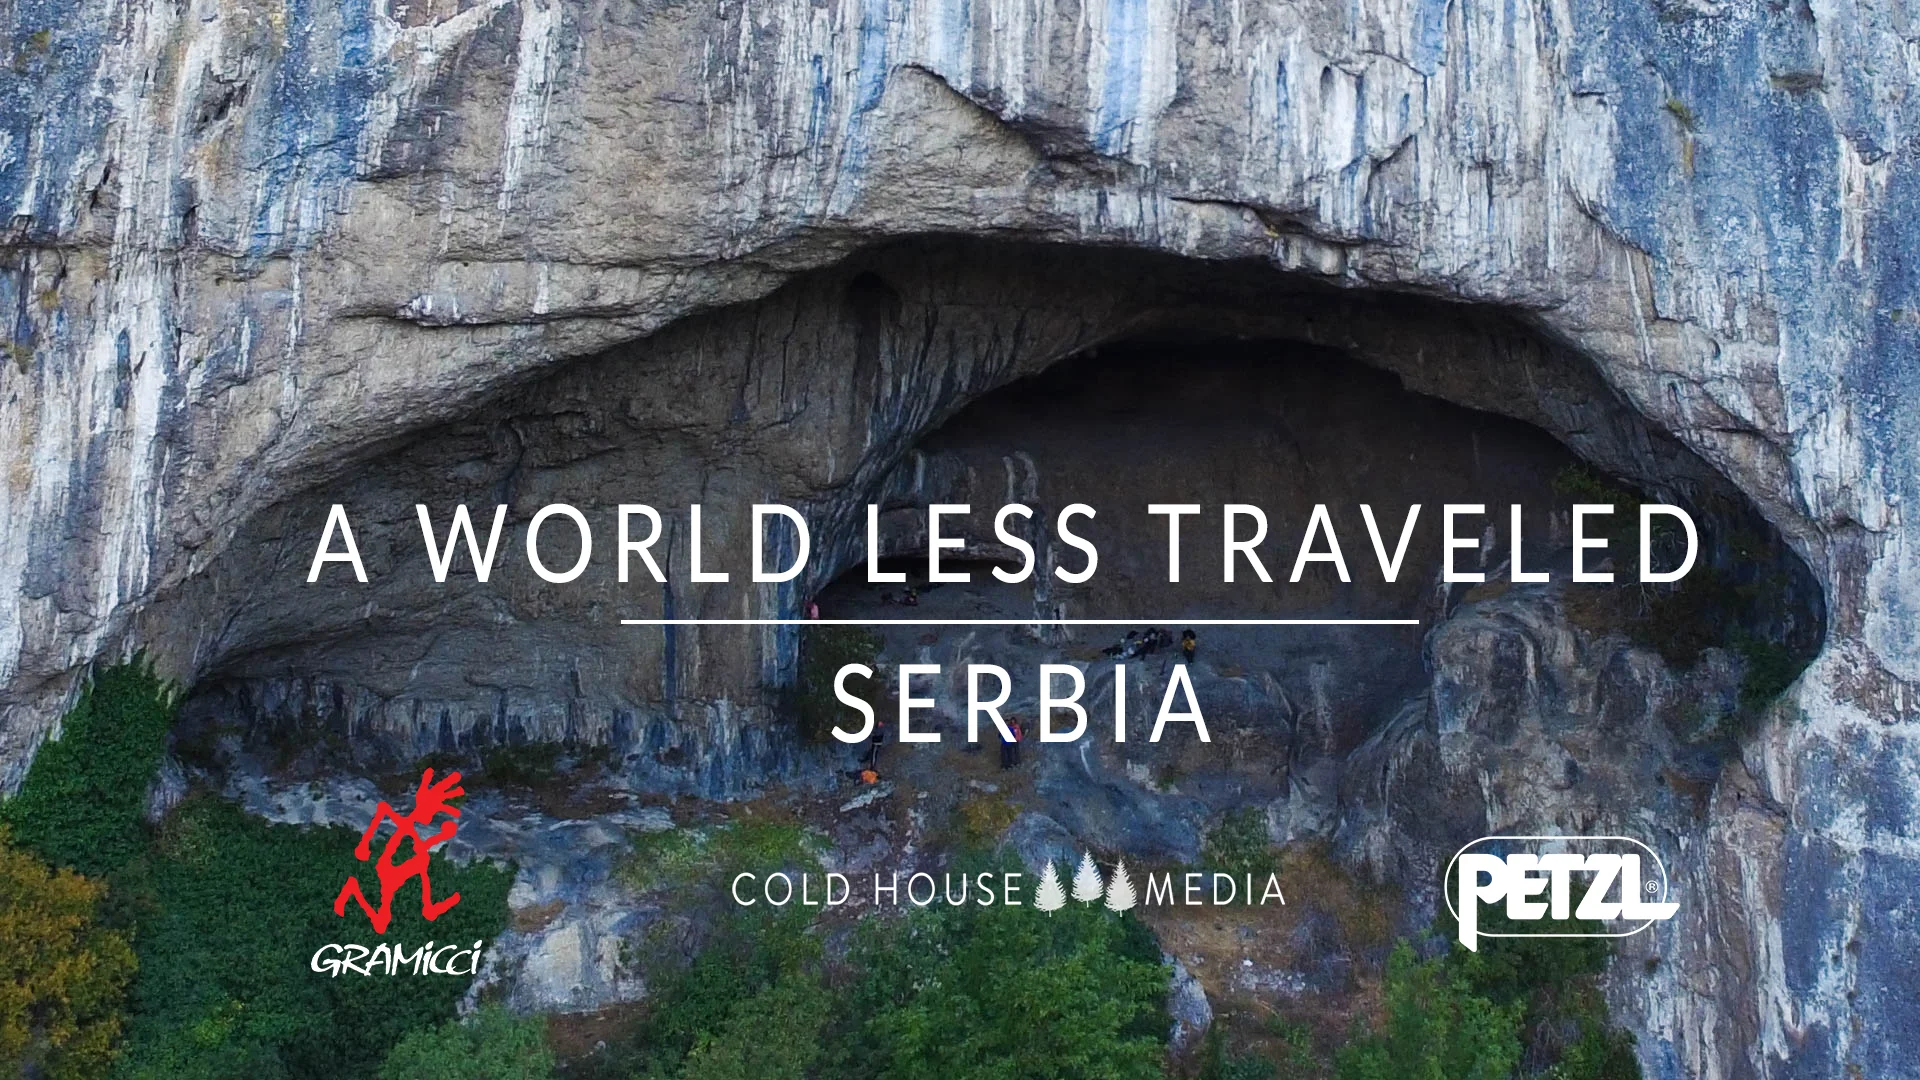 She traveled the world. Travelled или traveled. Destination Serbia 1.